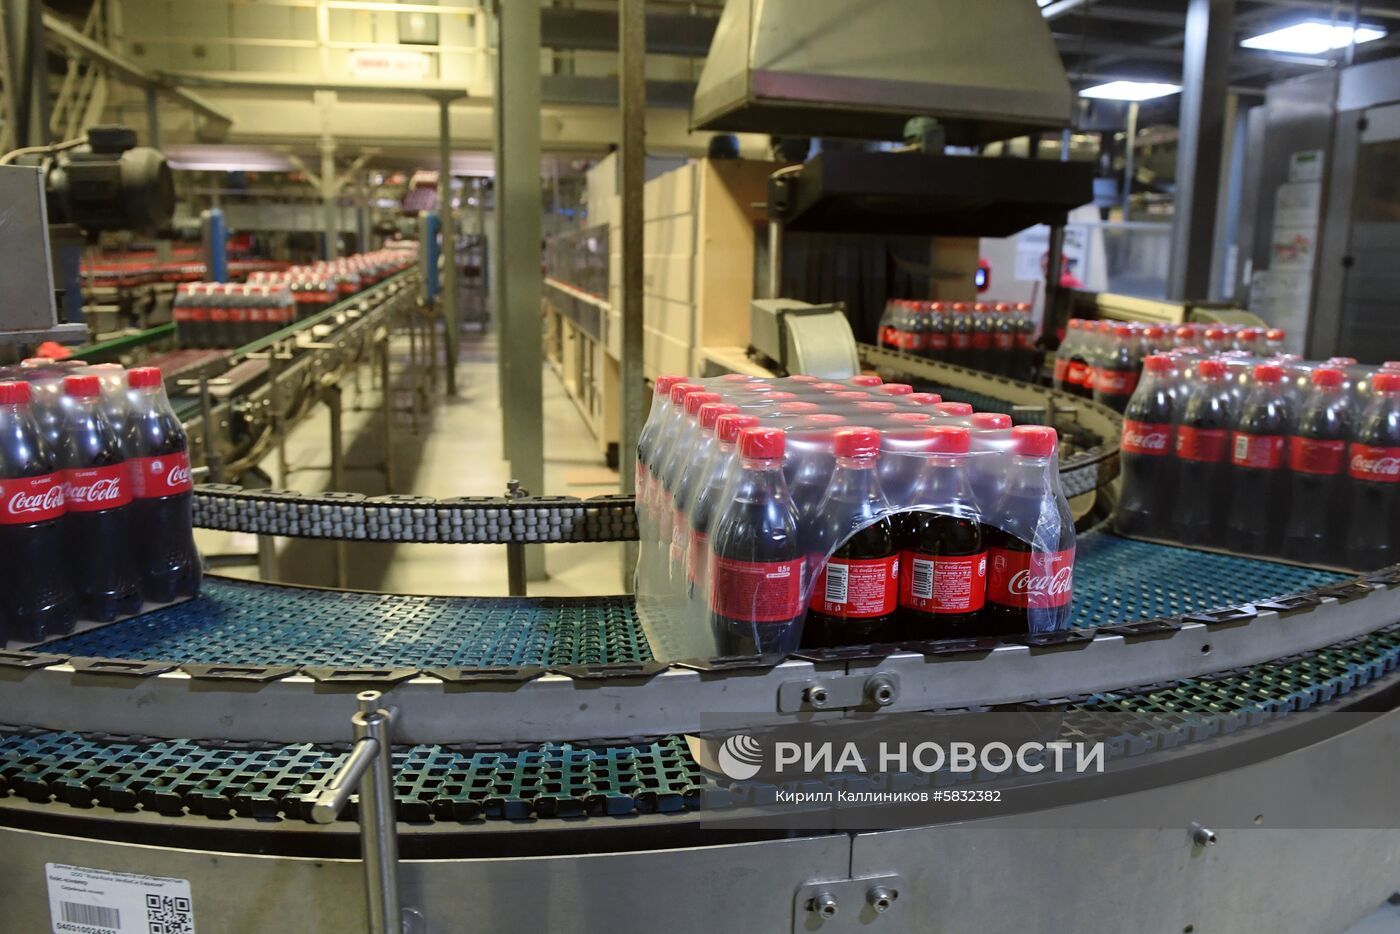 Производство напитков на заводе Сосa-Cola 